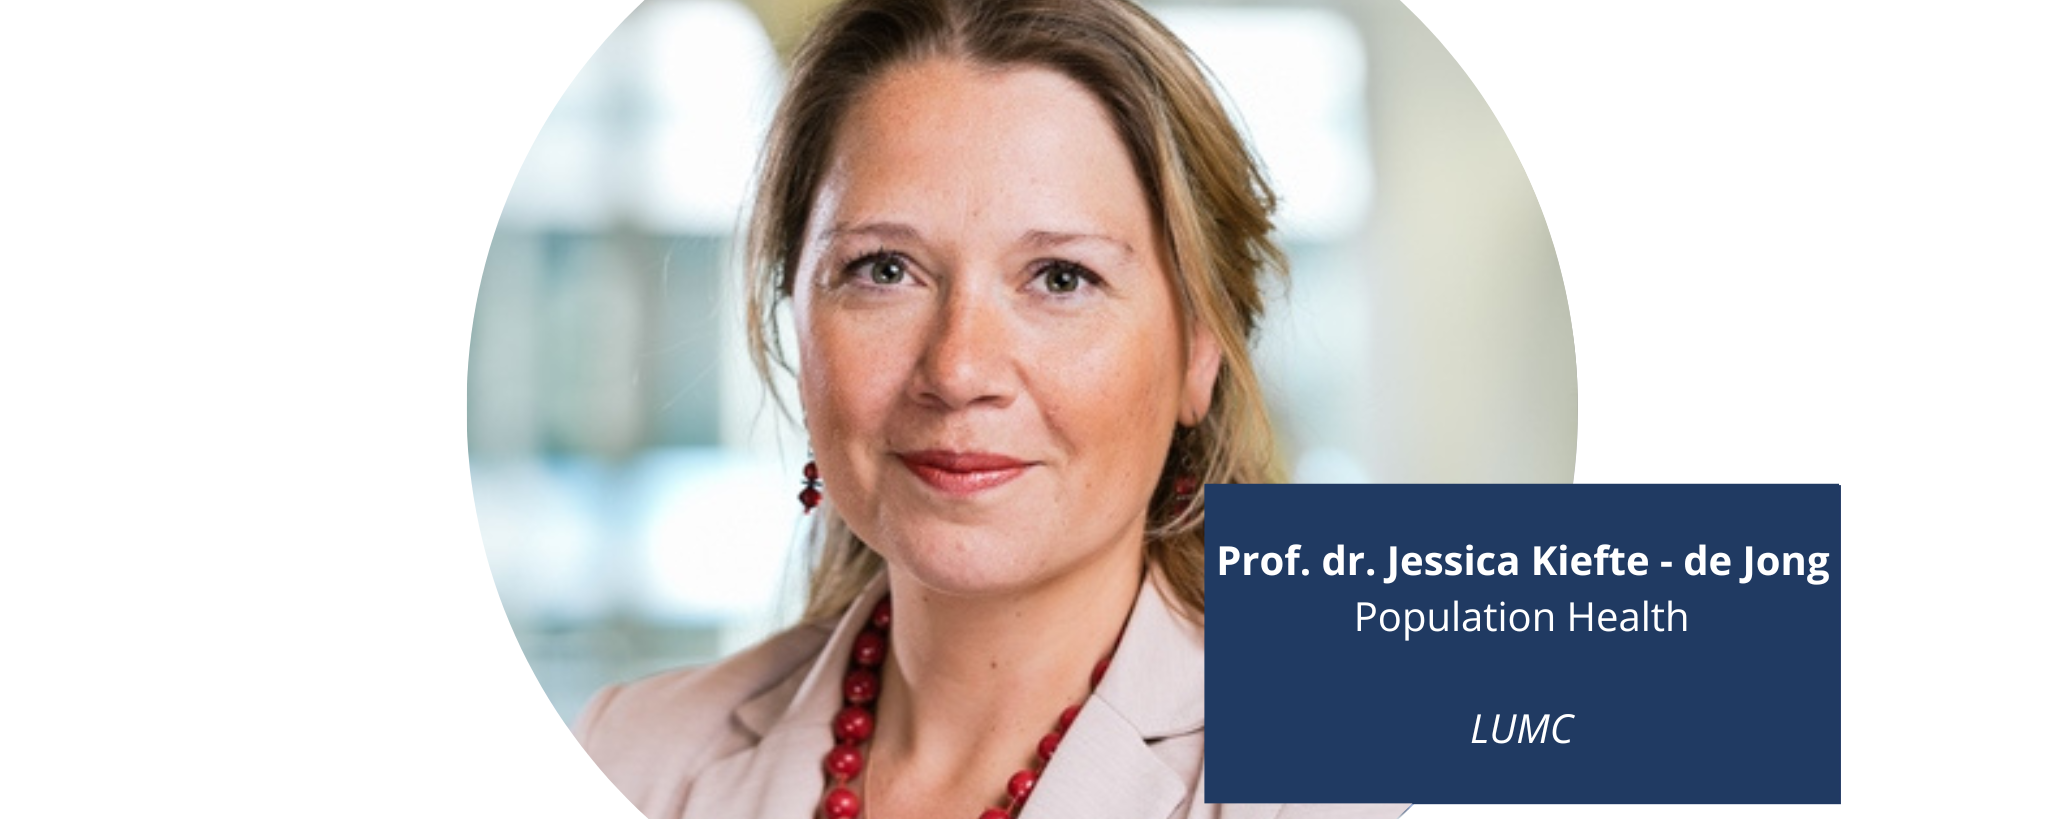 Prof. dr Jessica Kiefte-de Jong